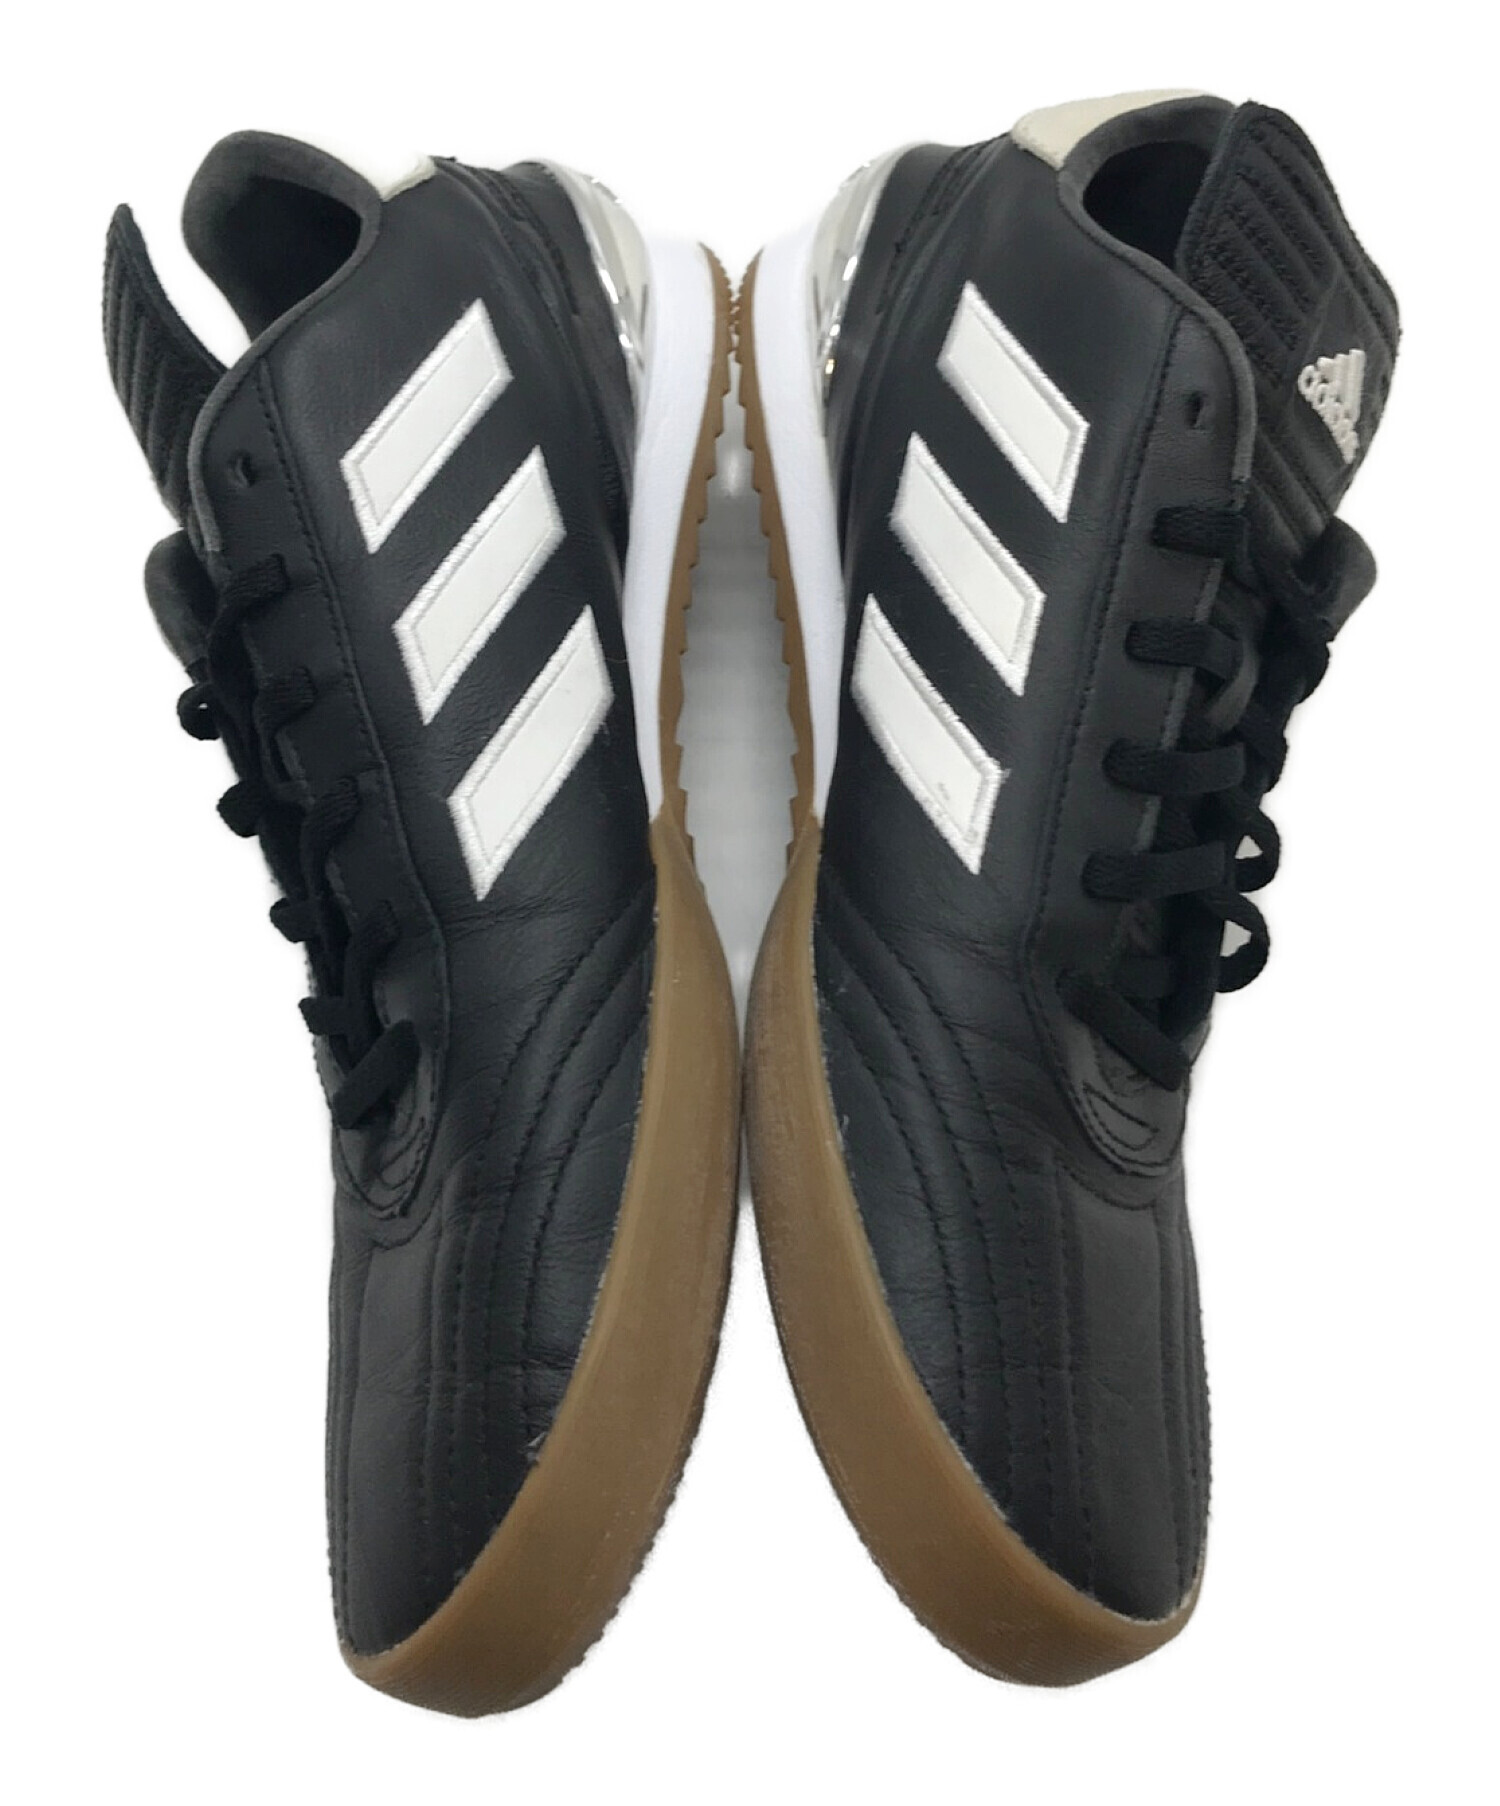 adidas (アディダス) Gosha Rubchinskiy (ゴーシャラブチンスキー) GR Copa WC Super ホワイト×ブラック  サイズ:27